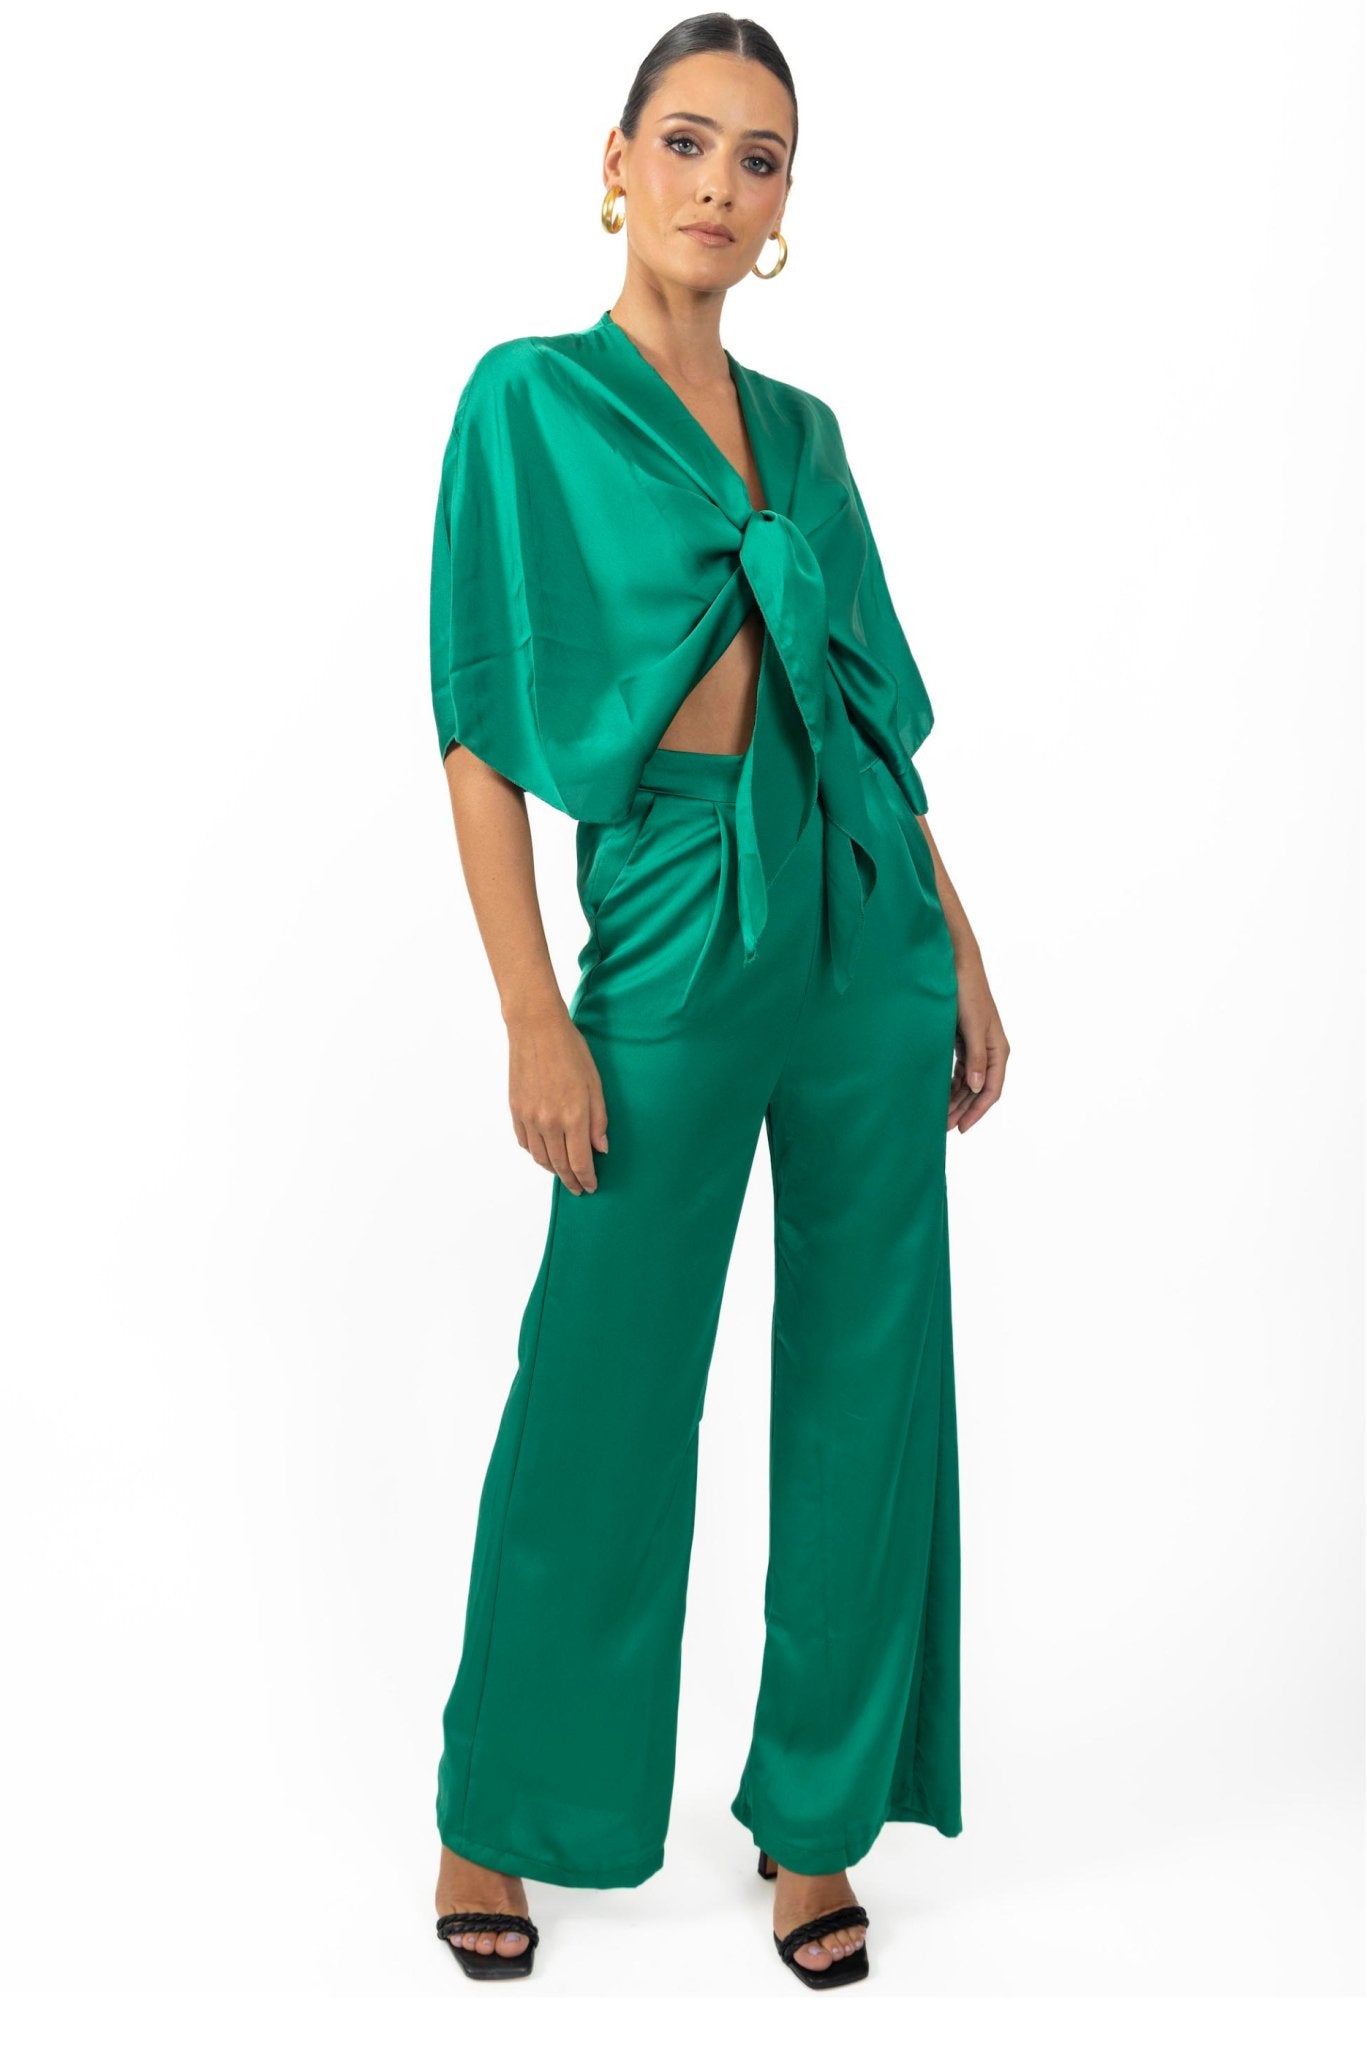 Athena Women's Silky Tie Front Top In Green - Akalia